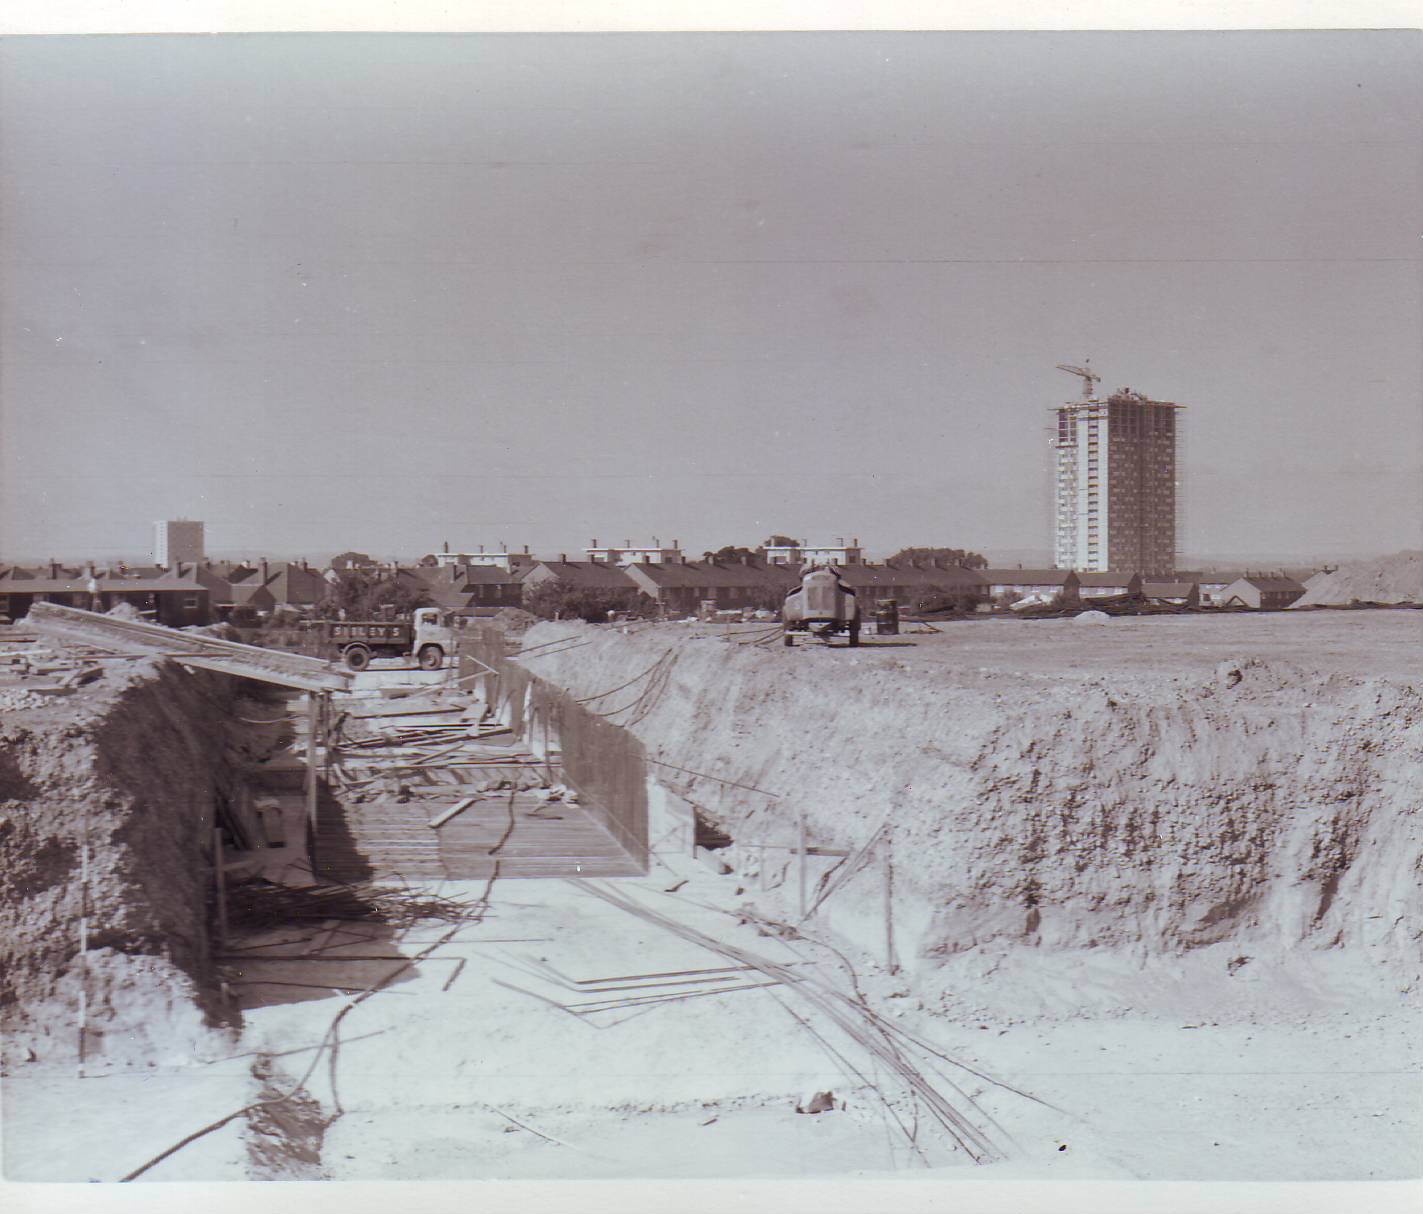 Subway construction making good progress in Aug 1964